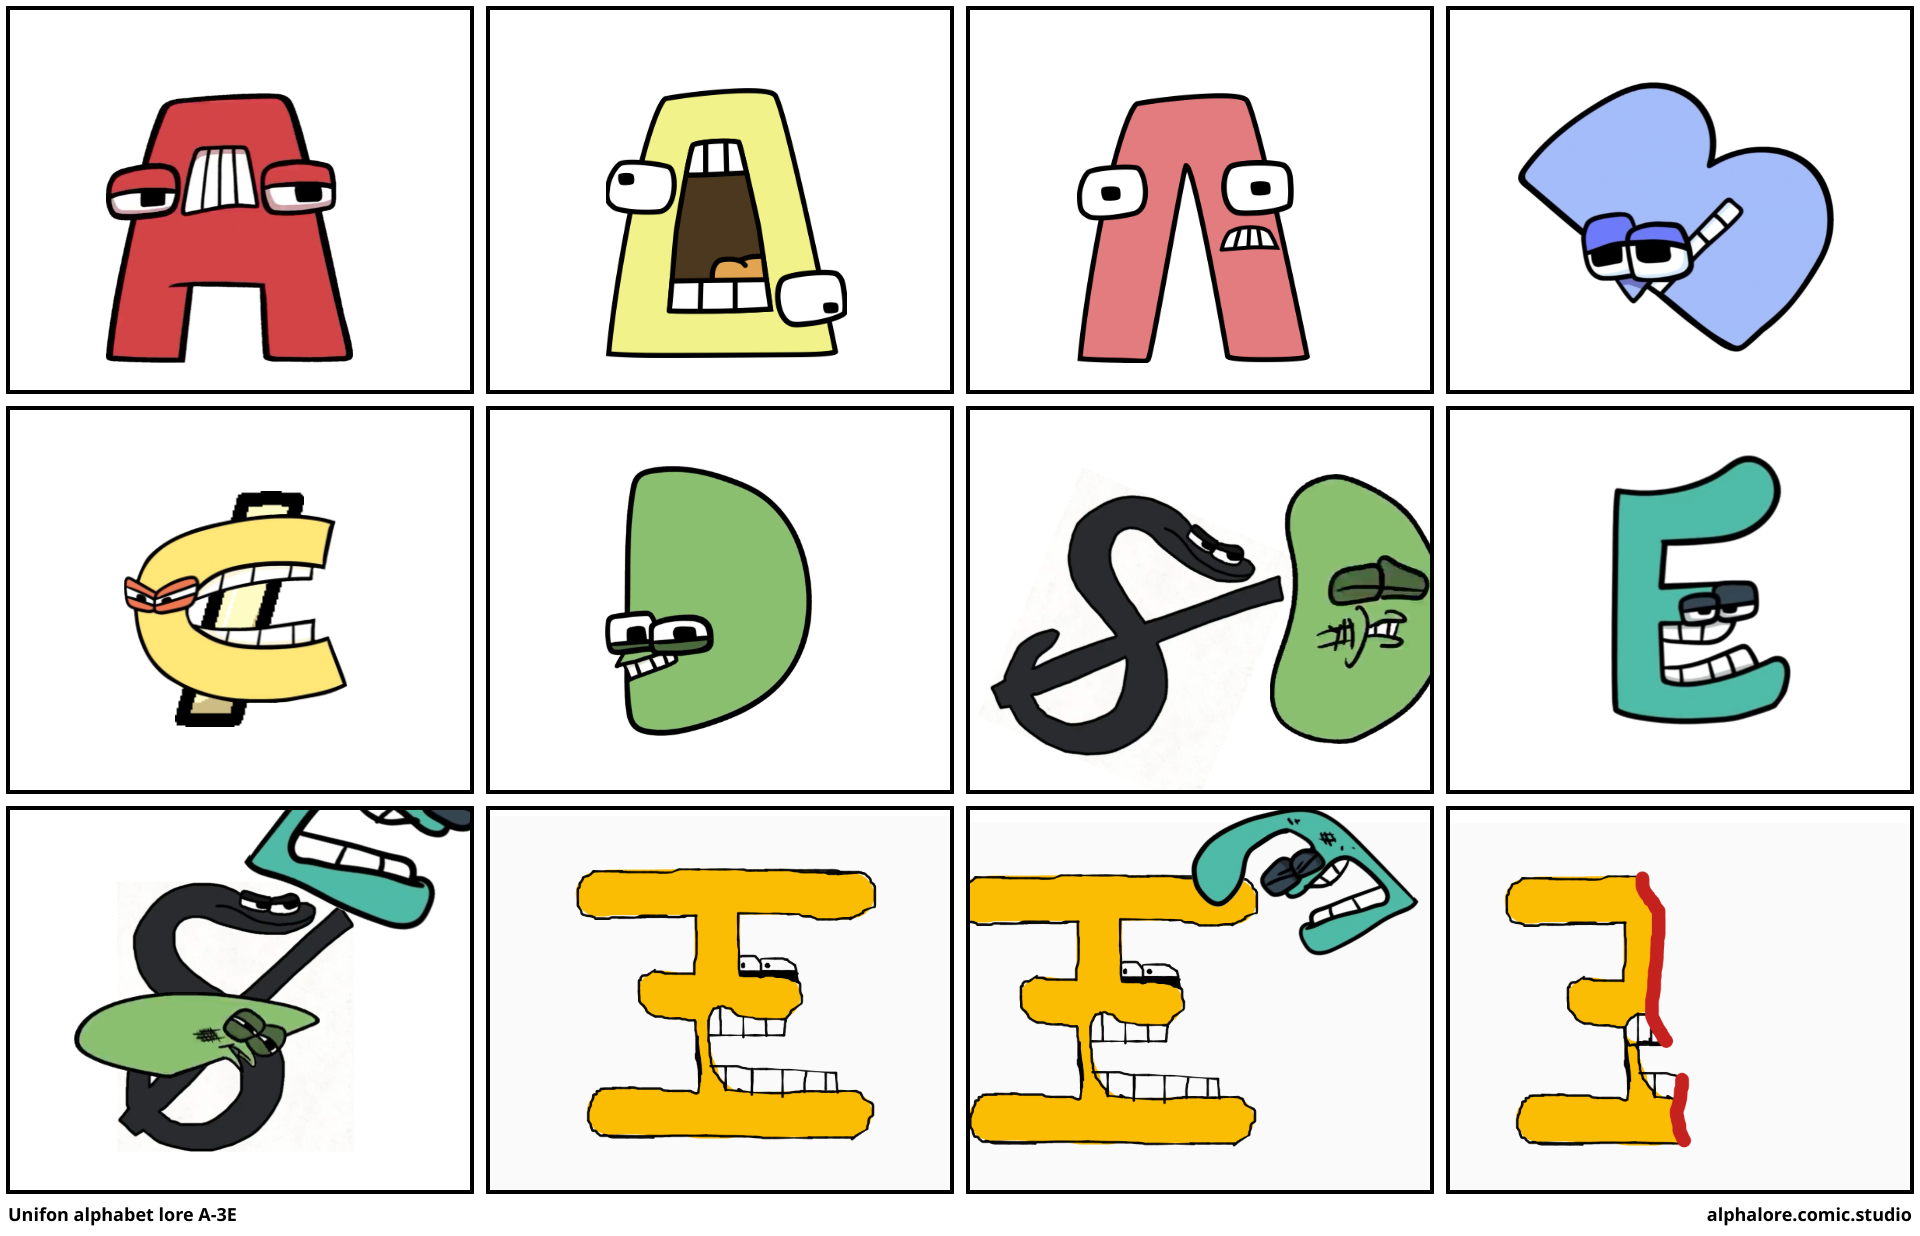 interactive unifon alphabet lore 